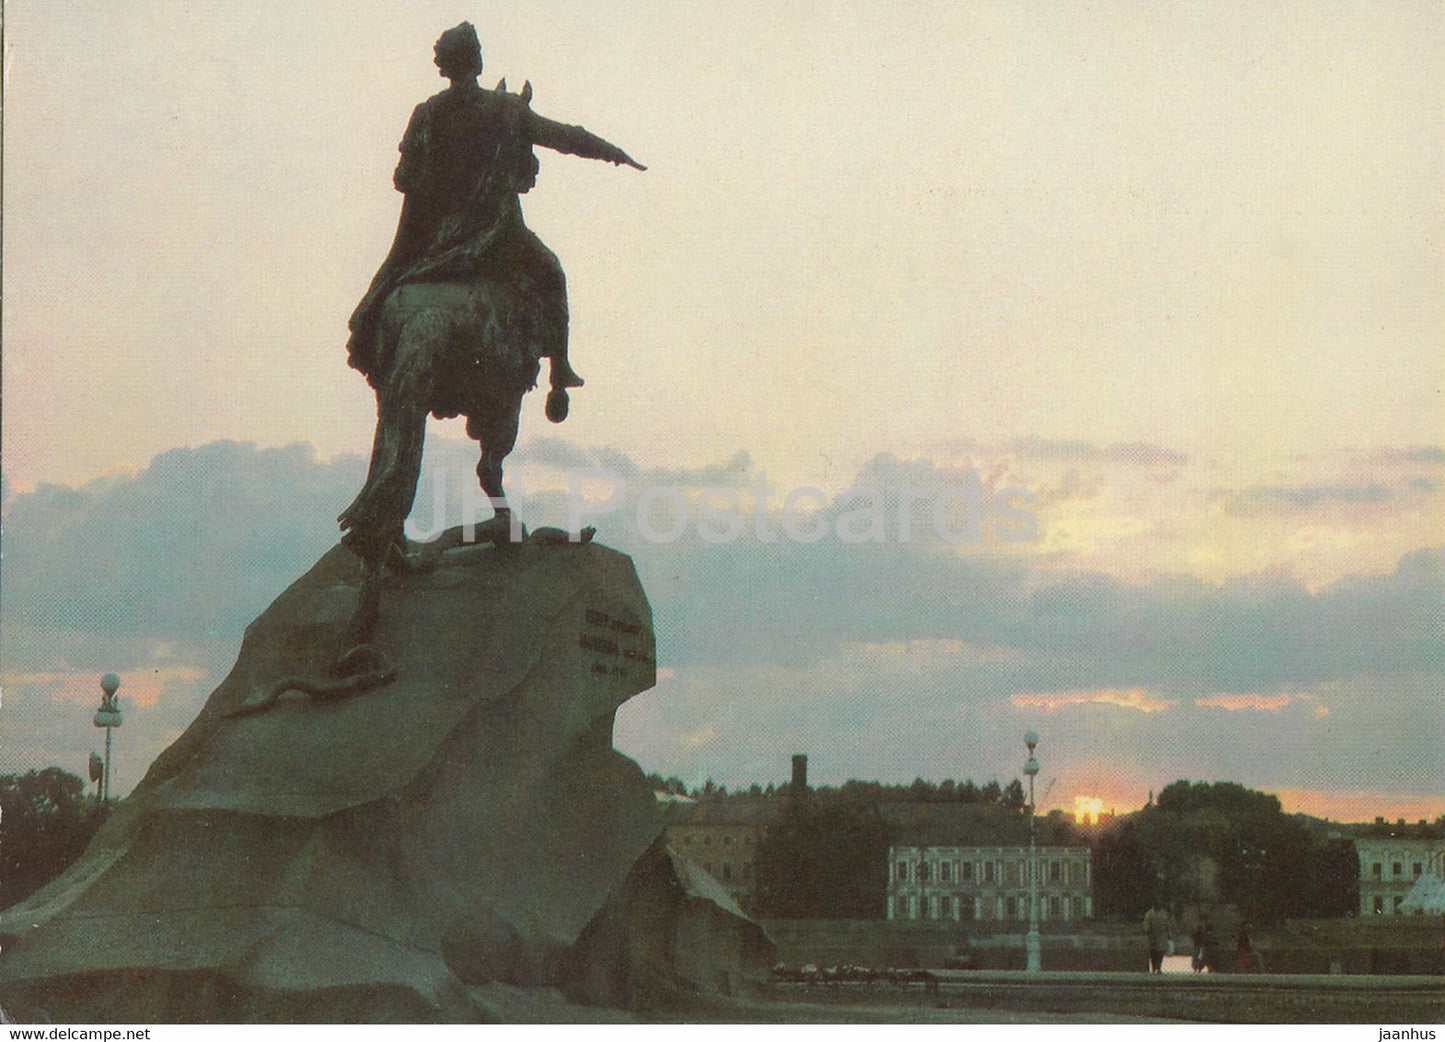 Leningrad - St Petersburg - monument to Peter I - Bronze Horseman - postal stationery - 1 - 1991 - Russia USSR - unused - JH Postcards